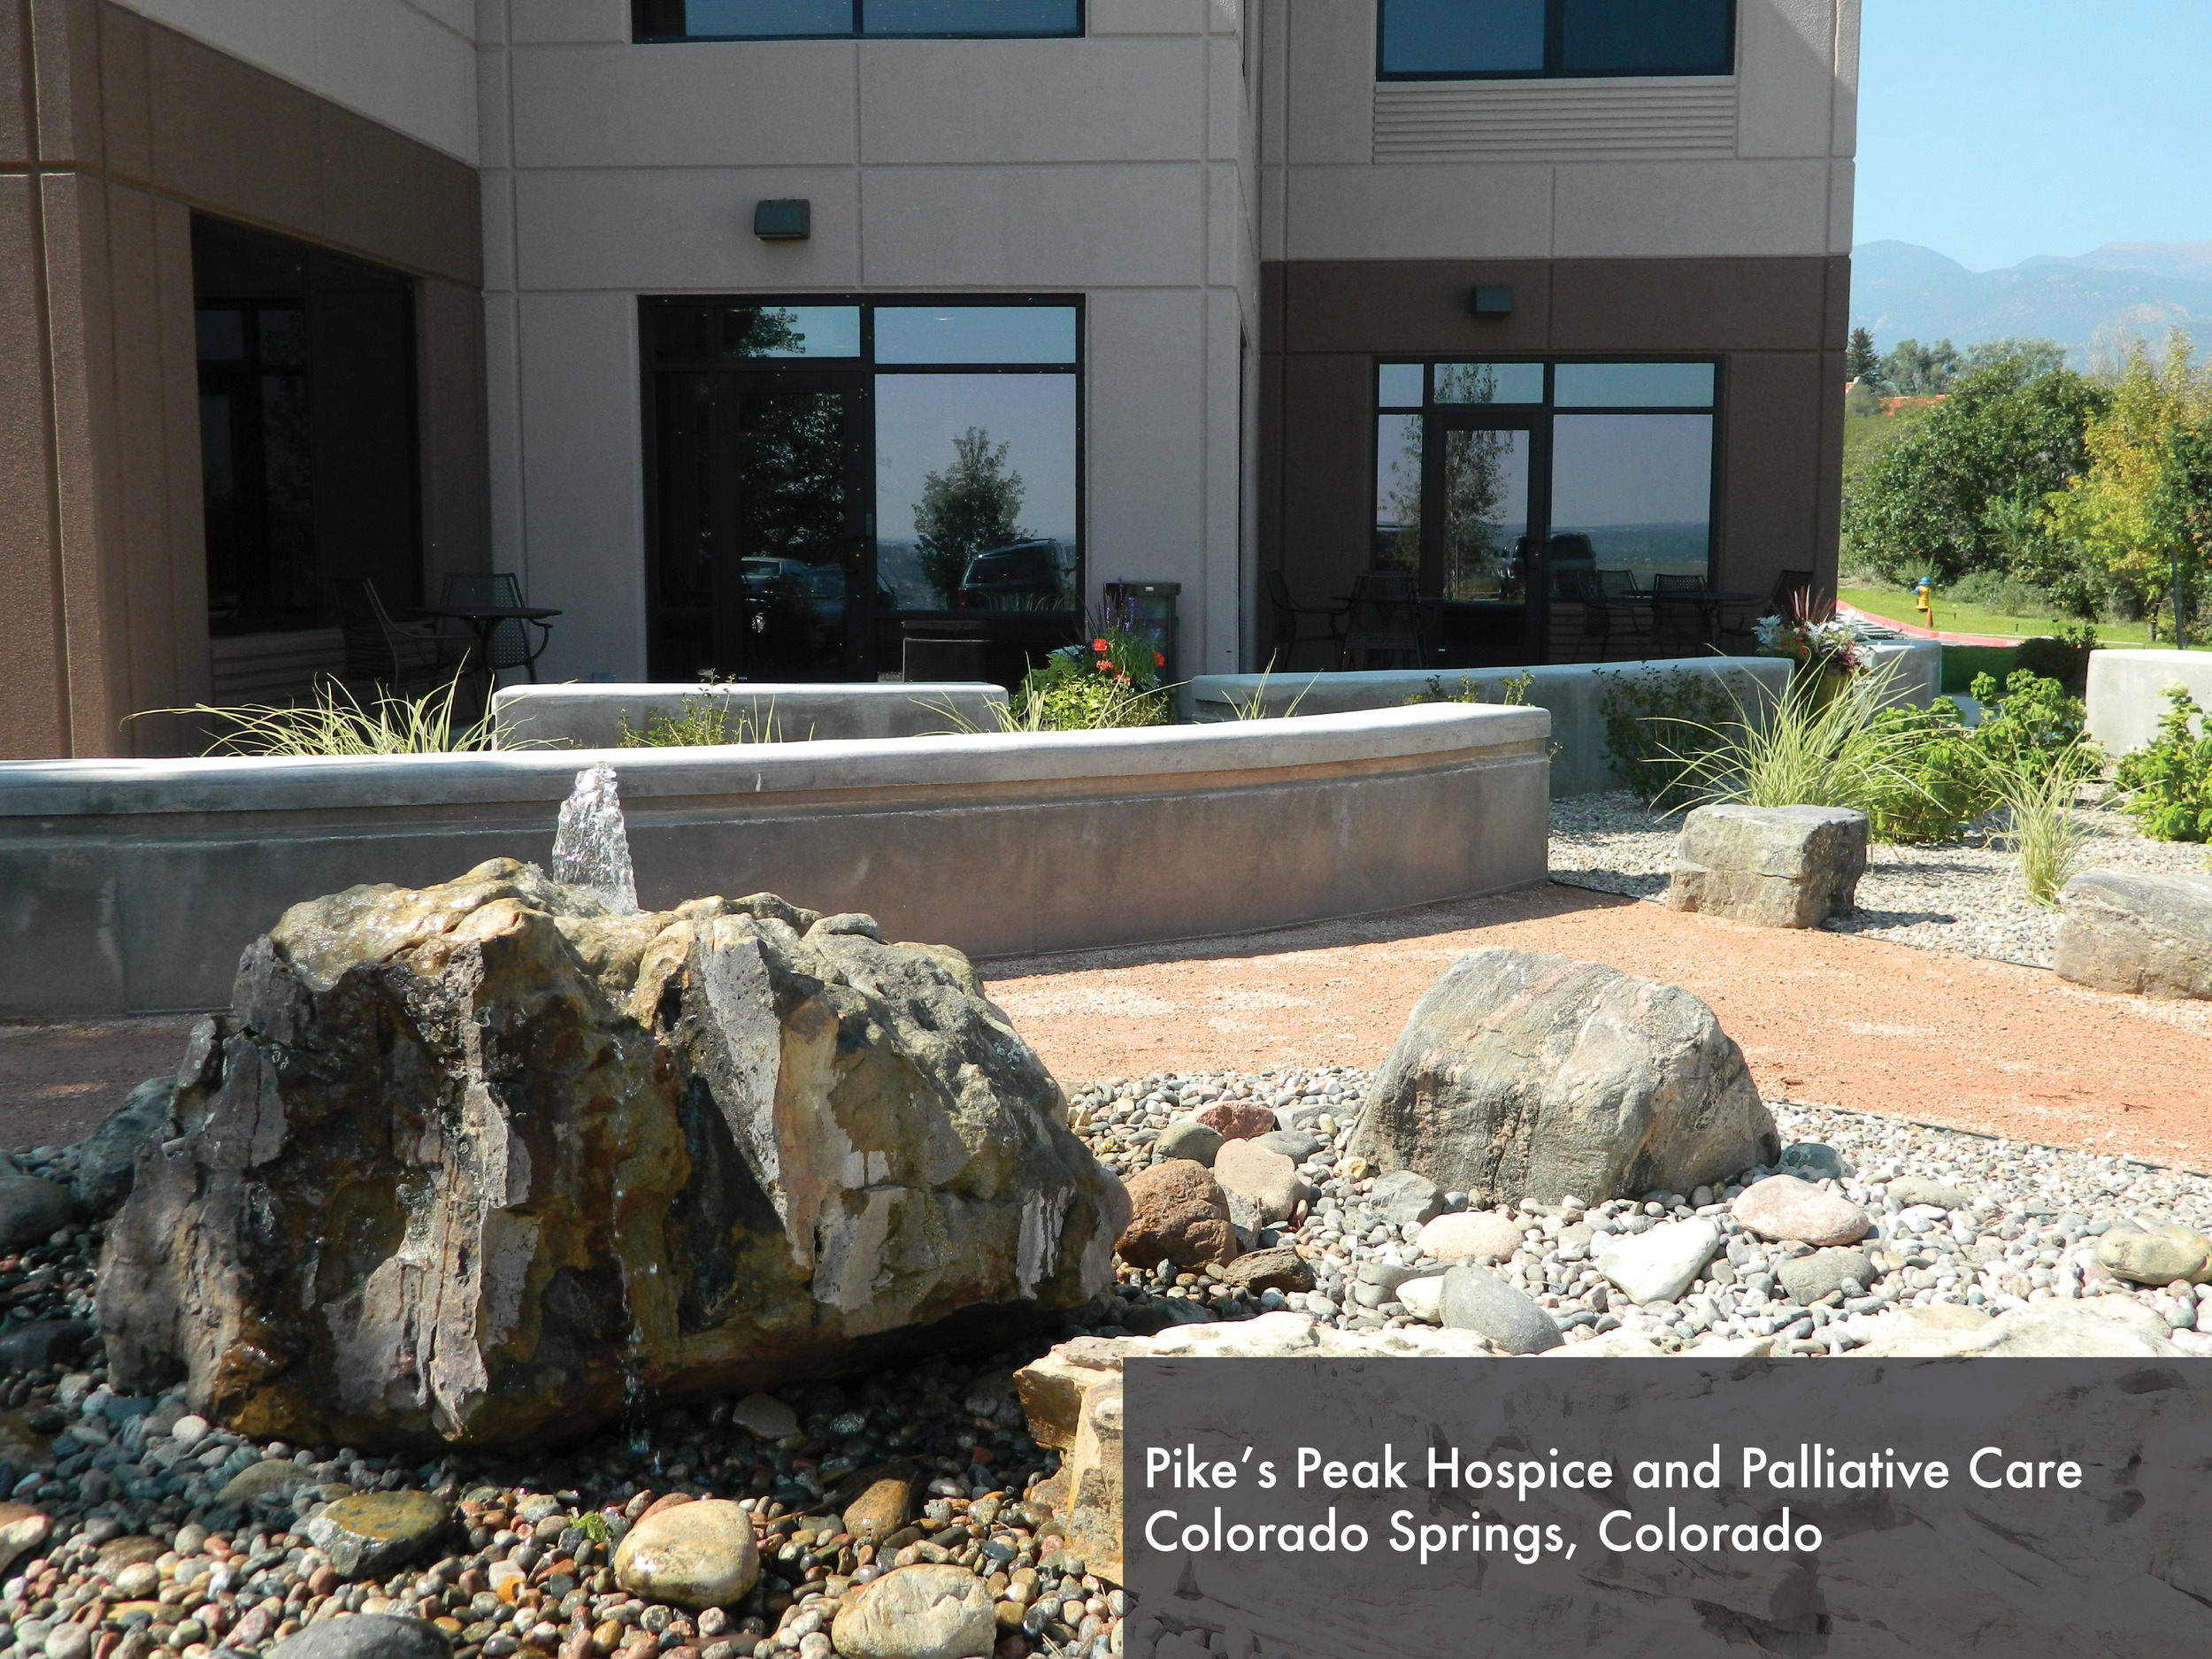 Pike's Peak Hospice and Palliative Care Colorado Springs, Colorado